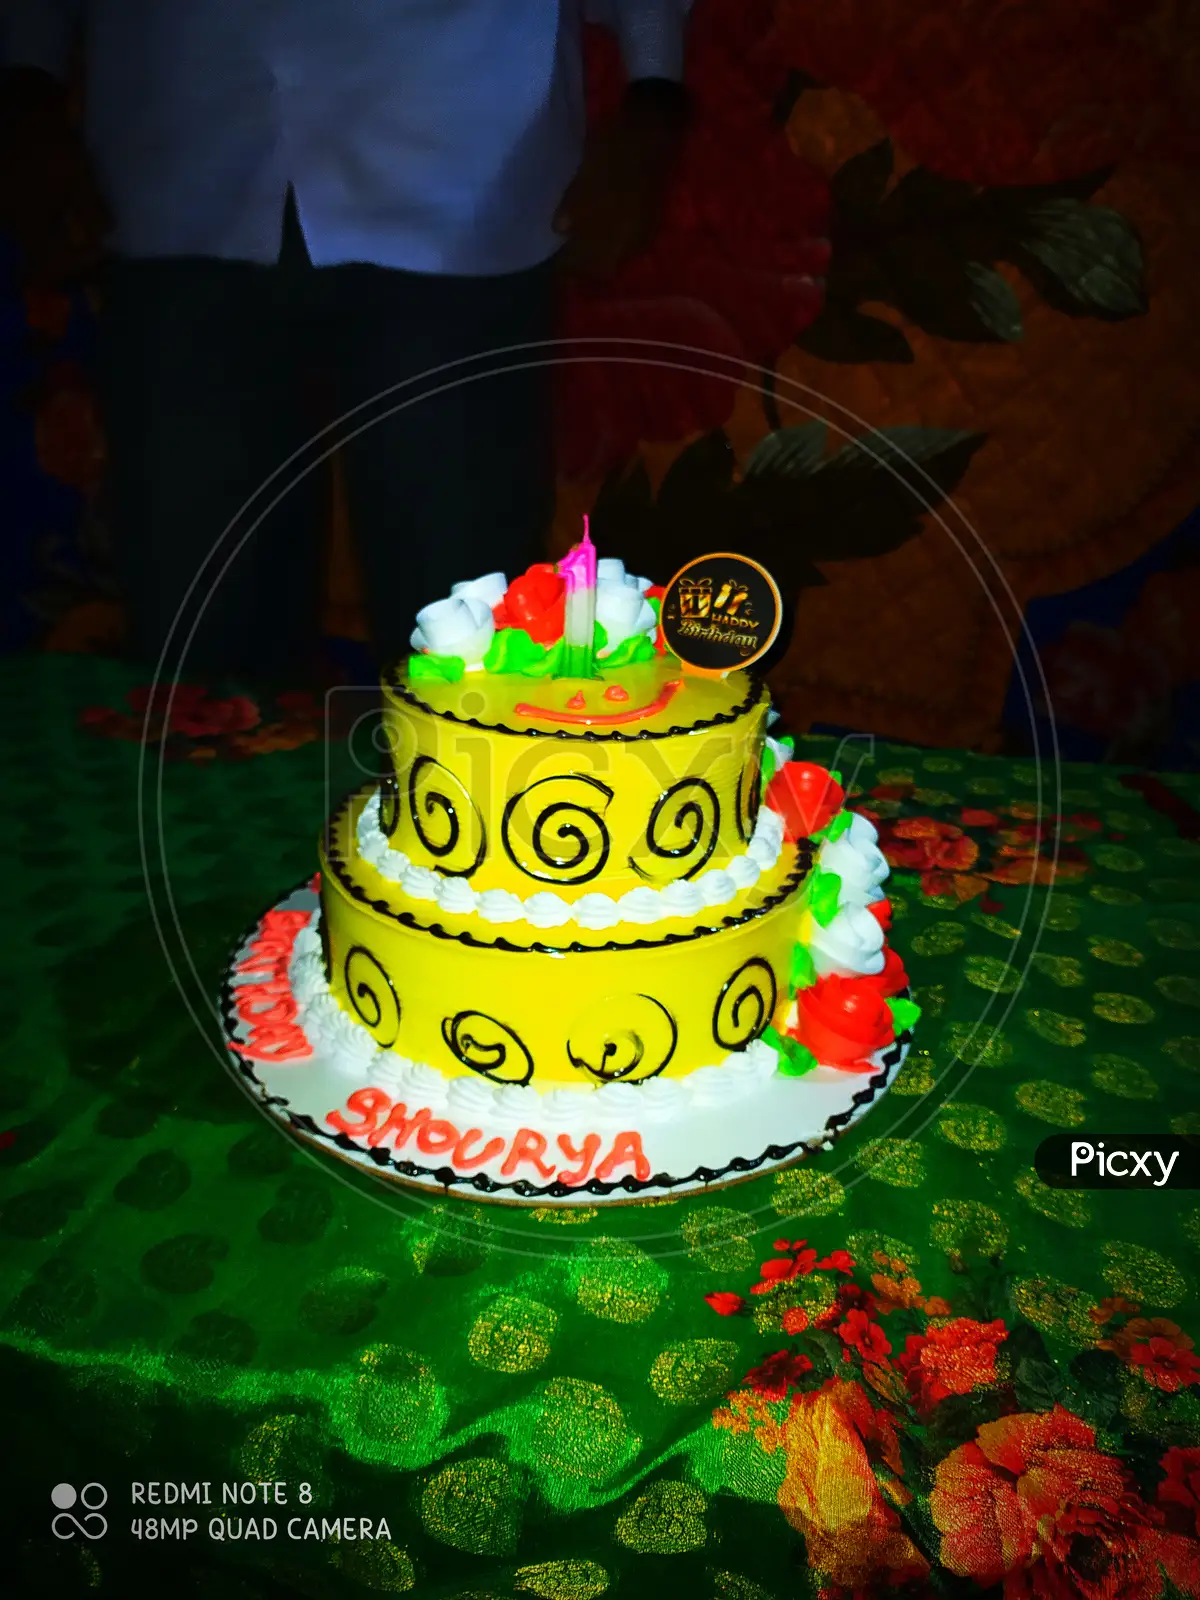 Details more than 65 ananya birthday cake pic - awesomeenglish.edu.vn